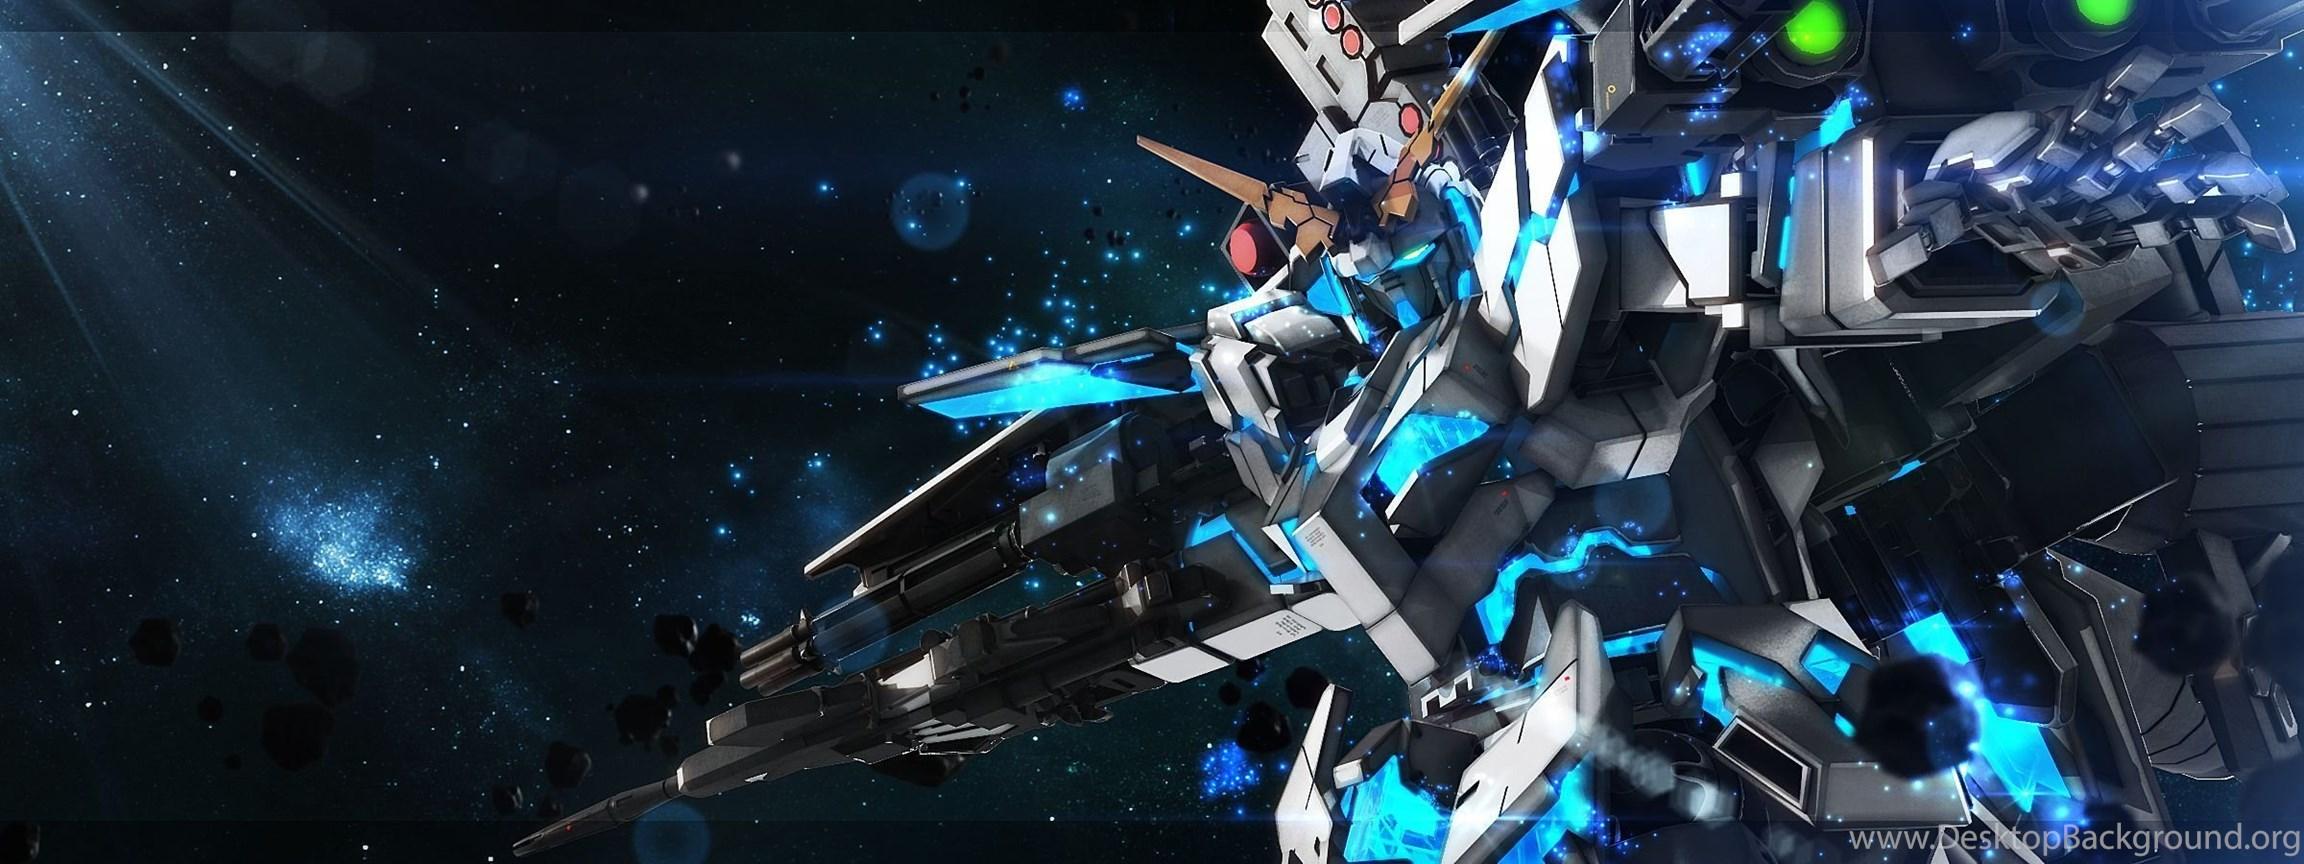 Gundam Pc Wallpapers Top Free Gundam Pc Backgrounds Wallpaperaccess